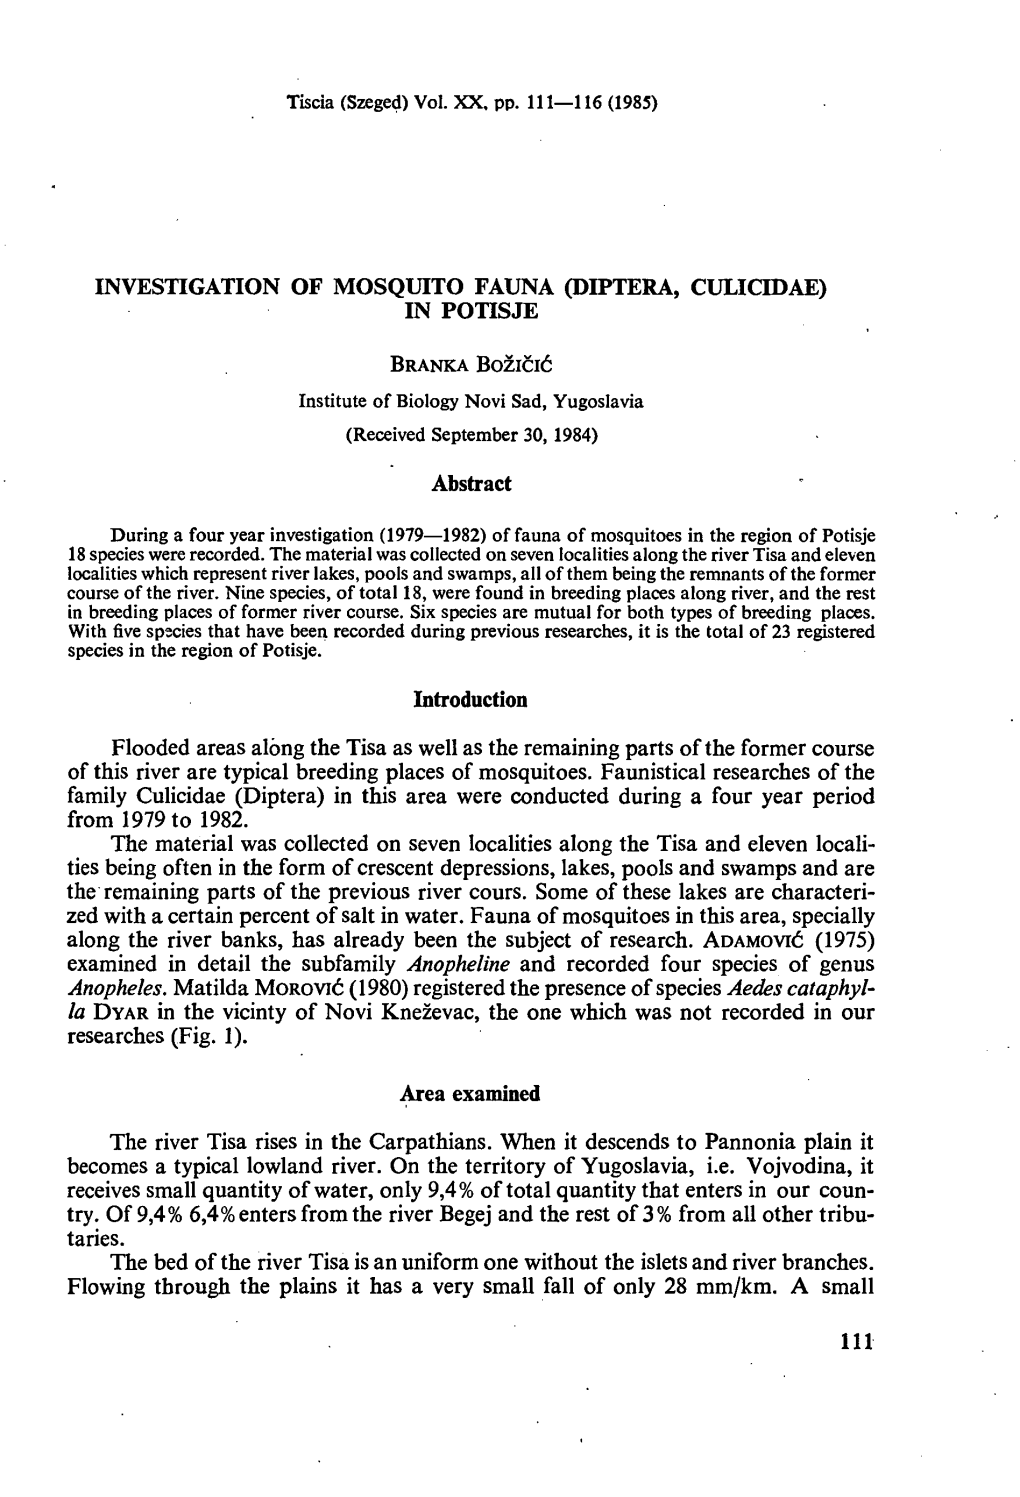 Investigation of Mosquito Fauna (Diptera, Culicidae) in Potisje